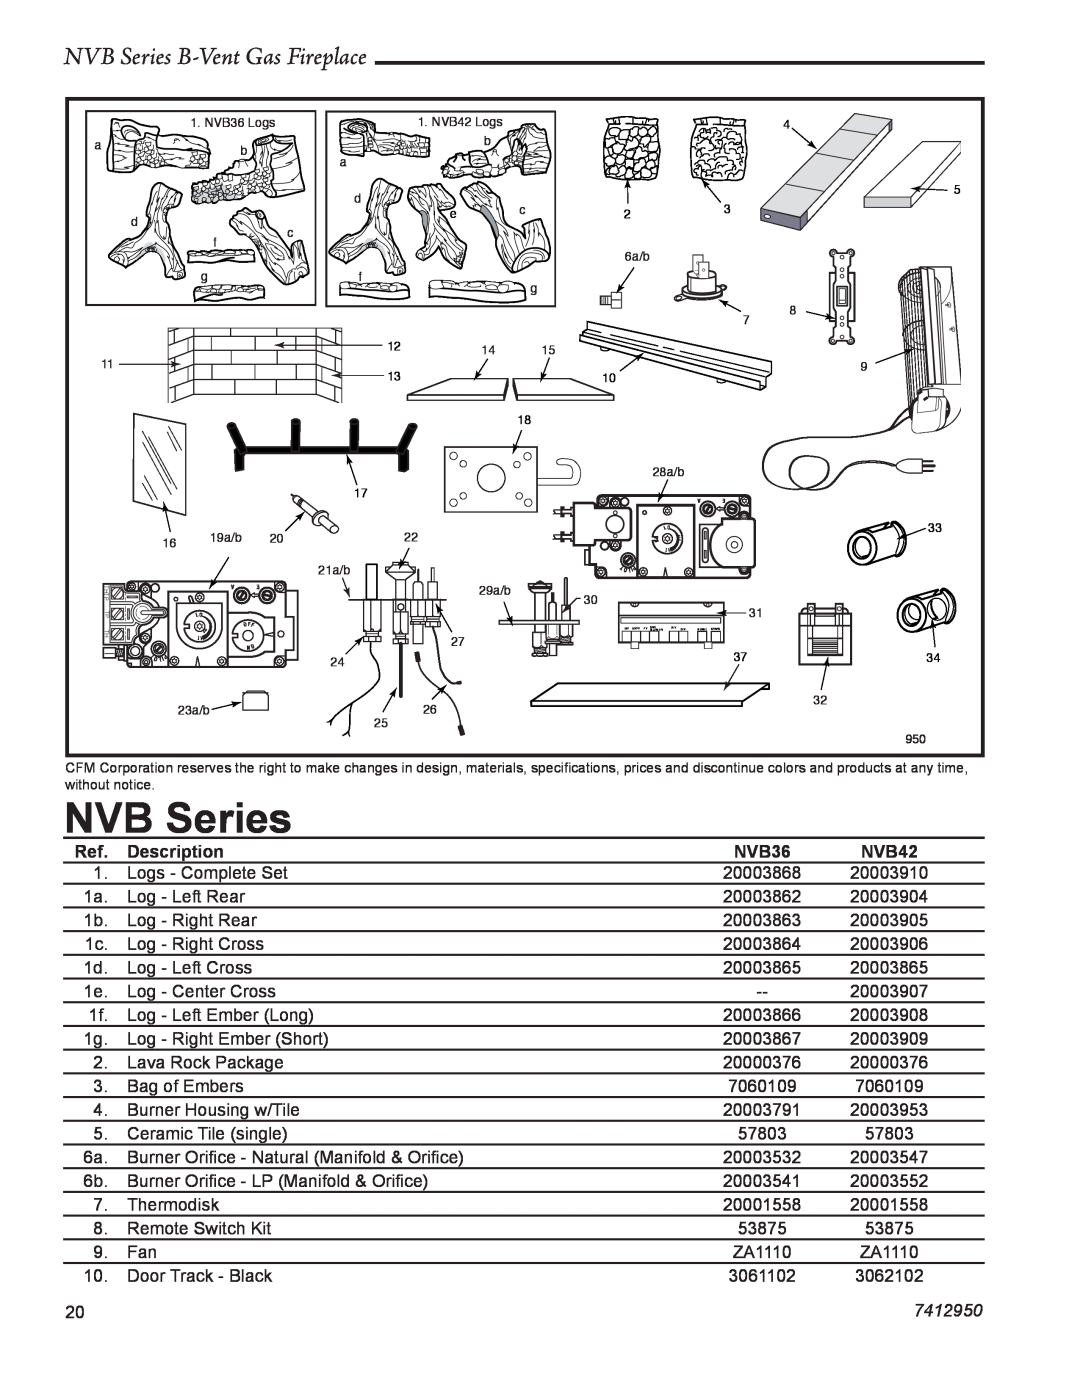 Vermont Casting NVBC42, NVBR36 warranty NVB Series B-VentGas Fireplace, Description, NVB36, NVB42, 7412950 